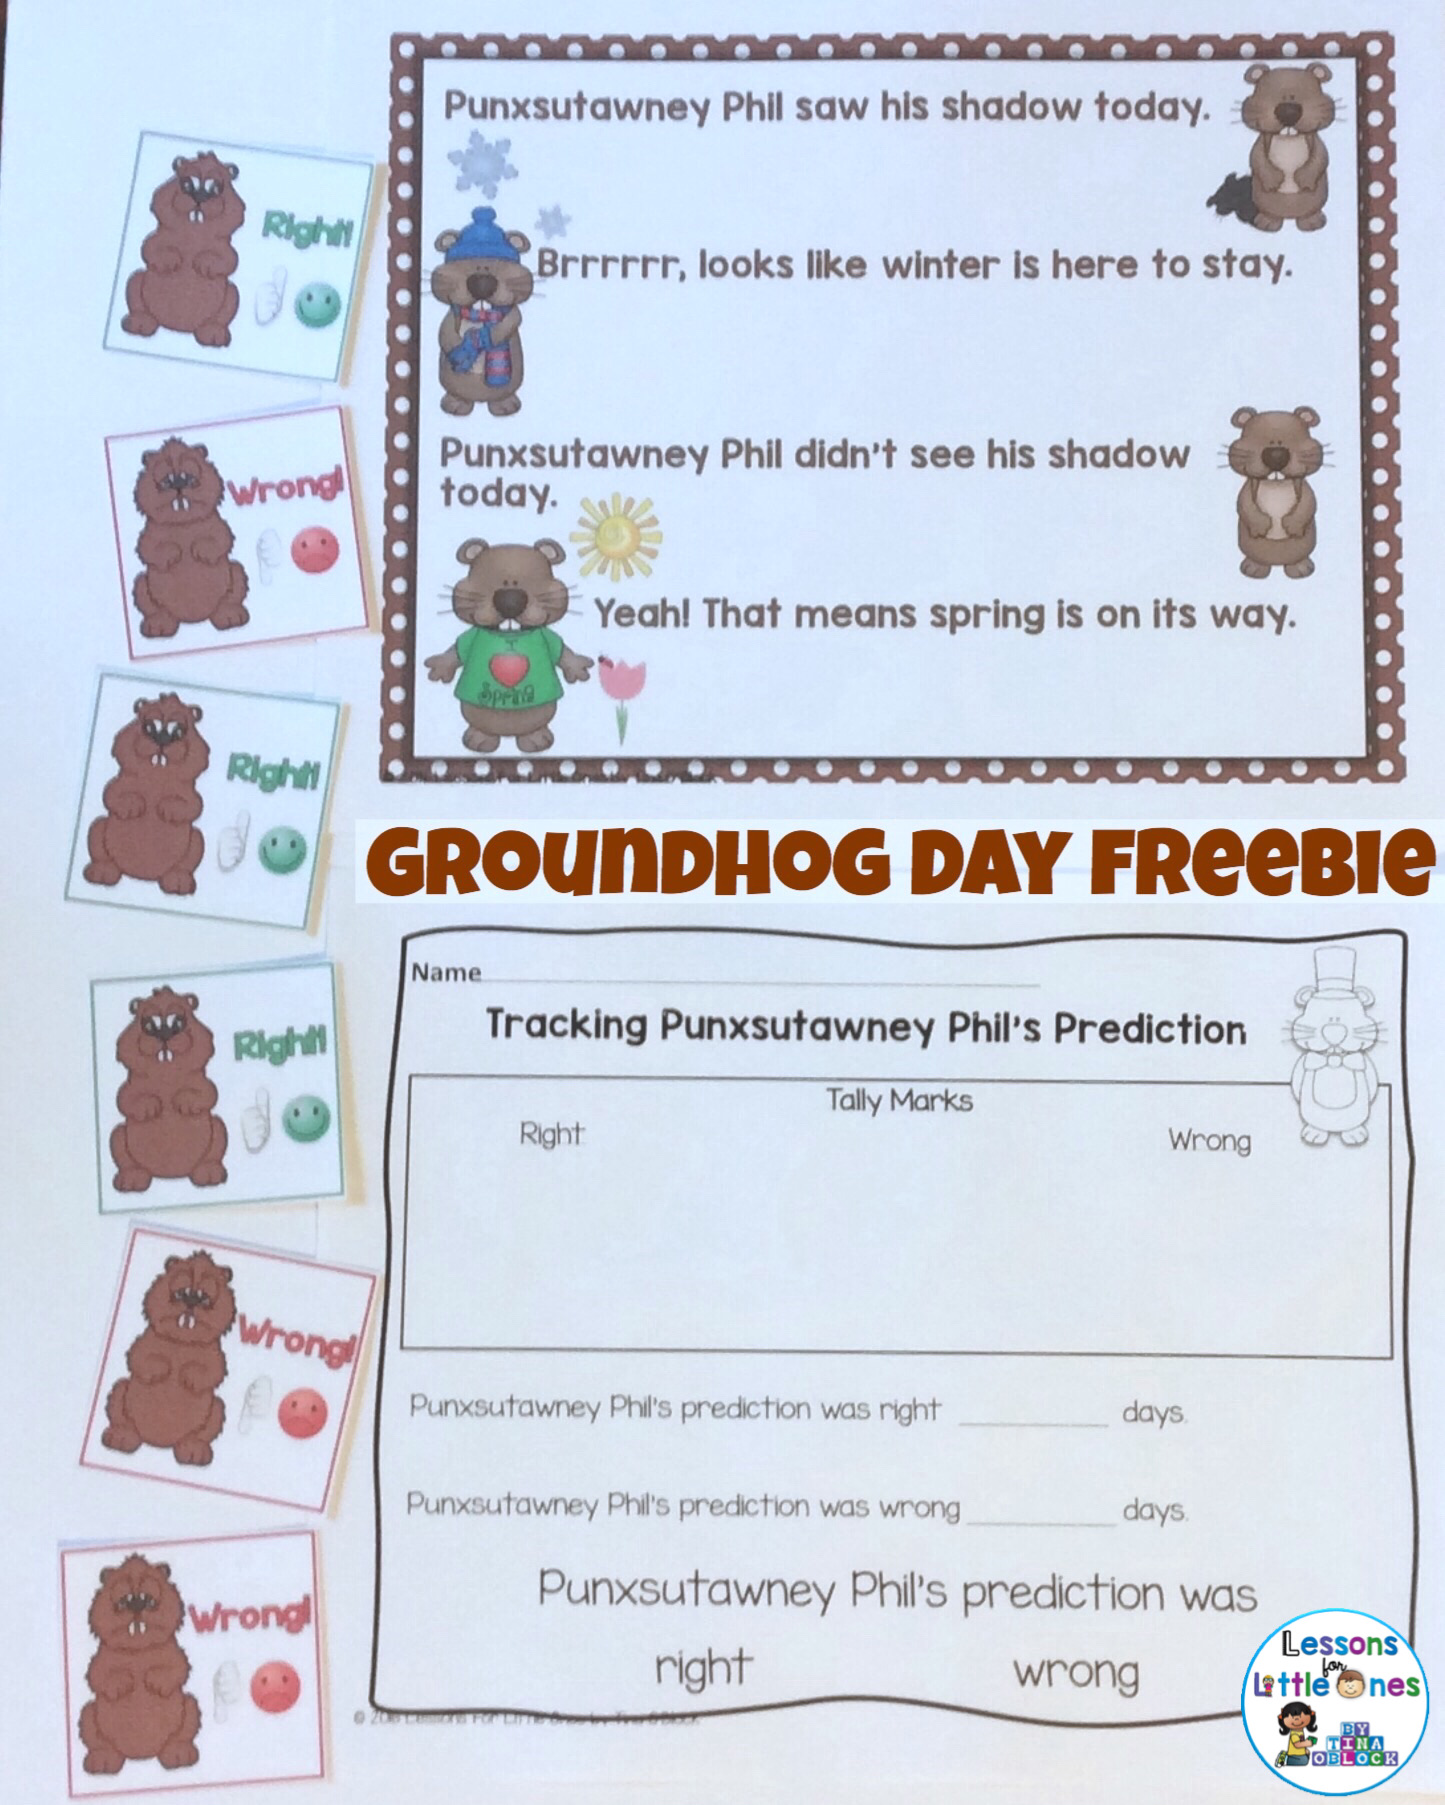 Groundhog Day Free Activity / Freebie